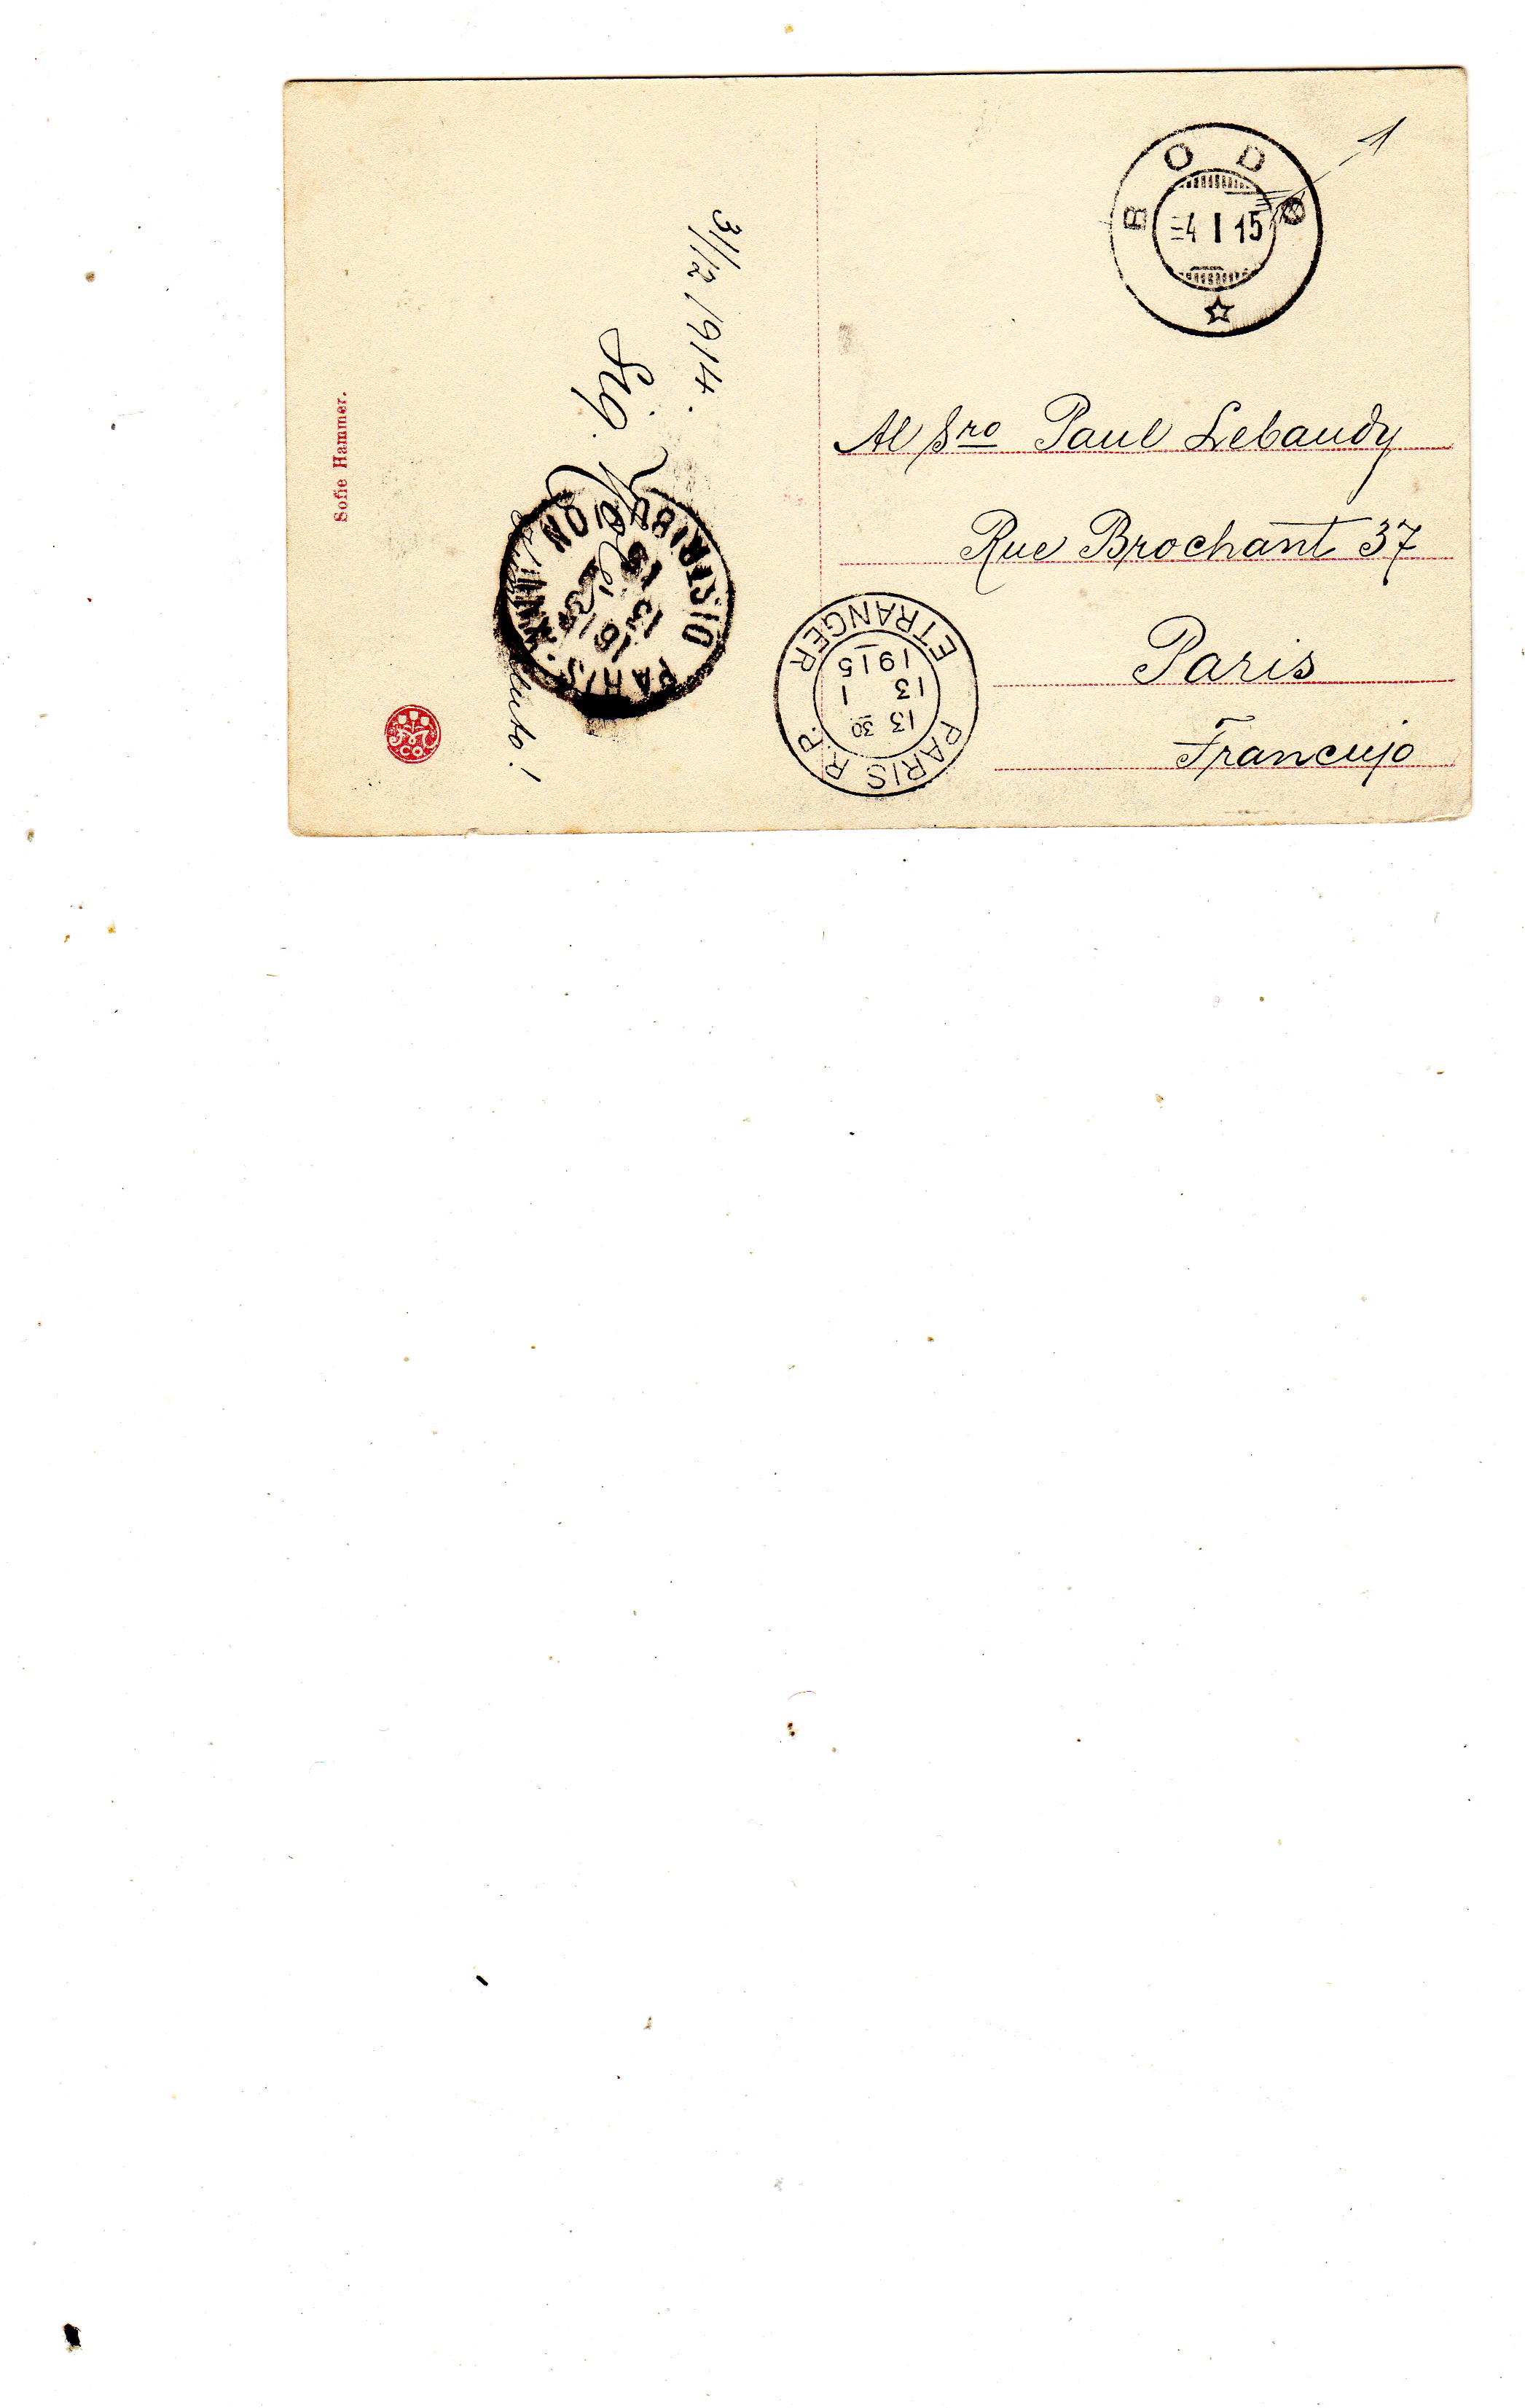 Rønvik asyl Sofie Hammer 1914 st Bodø/Paris